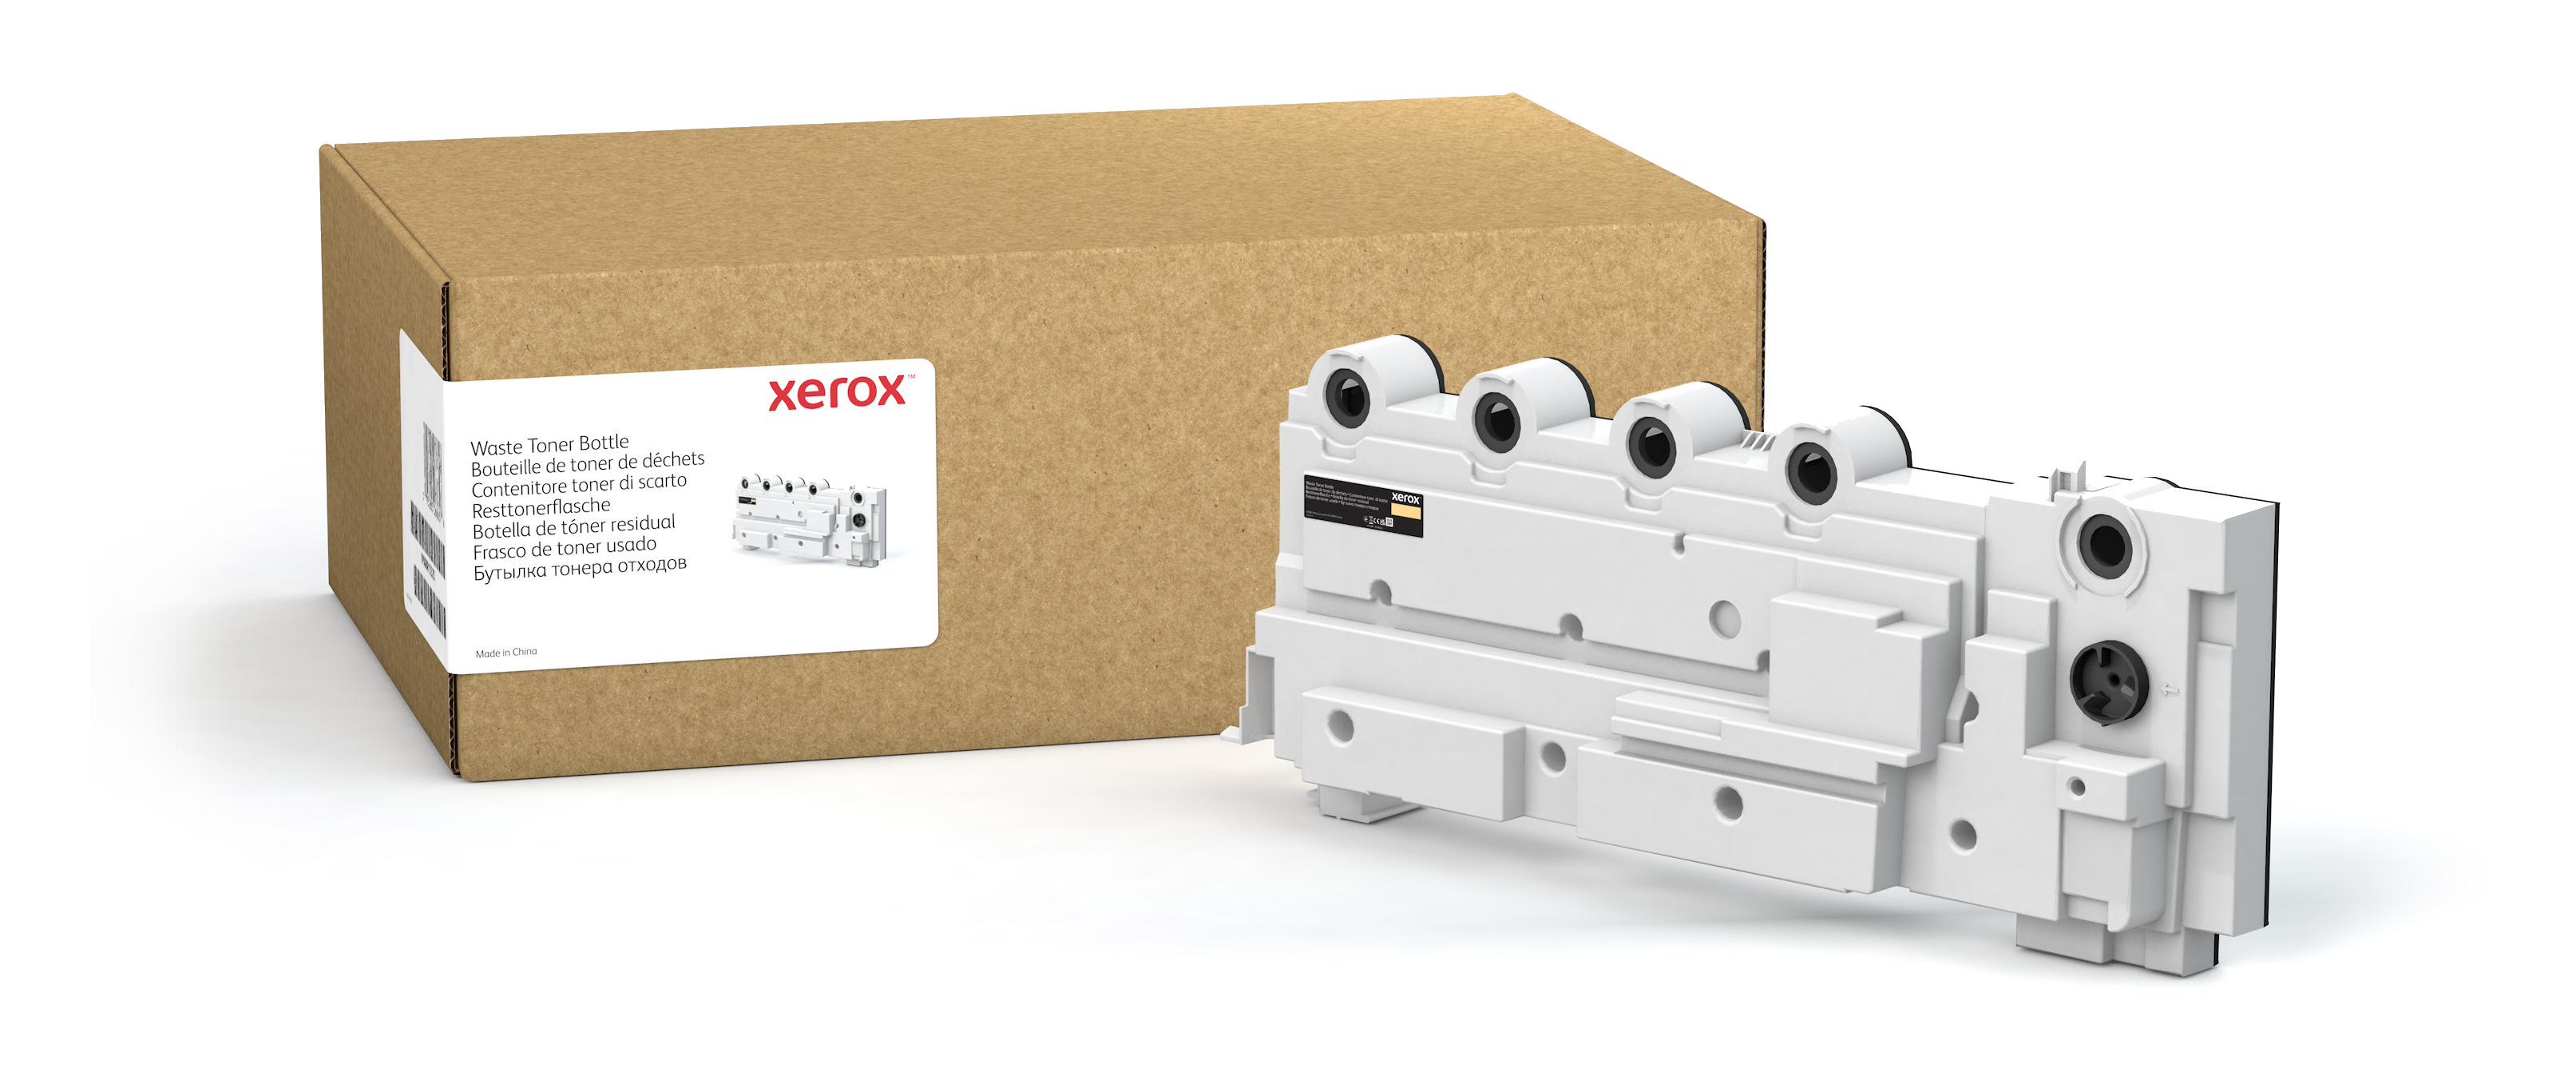 C310/C315 Waste Toner (25,000 yield) 008R13325 Genuine Xerox Supplies